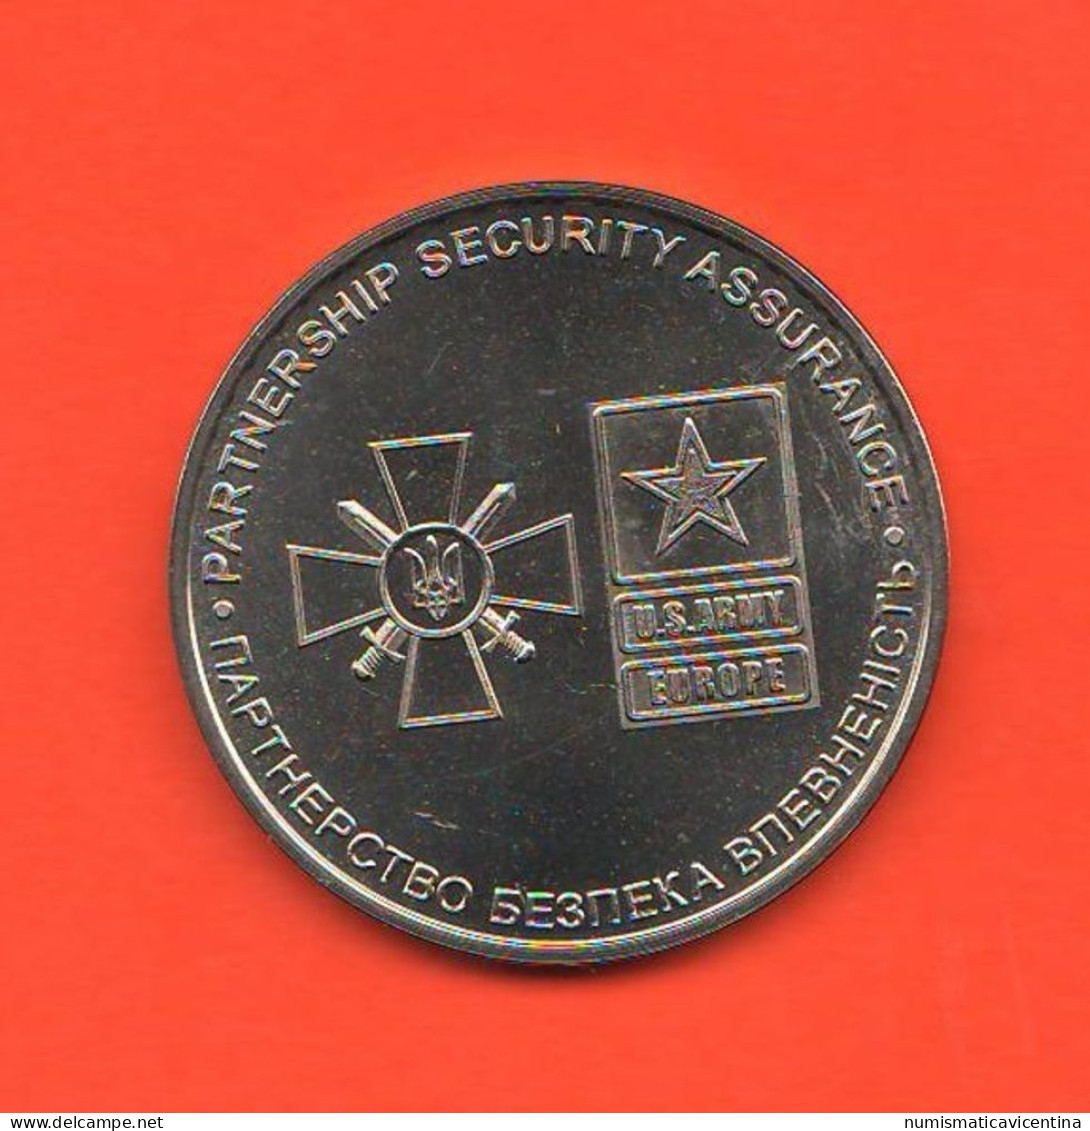 Saber Guardian Rapid Trident 2015 Ukraina Ucraine America Partnership Security Assurance Medal Medaille - Professionali/Di Società